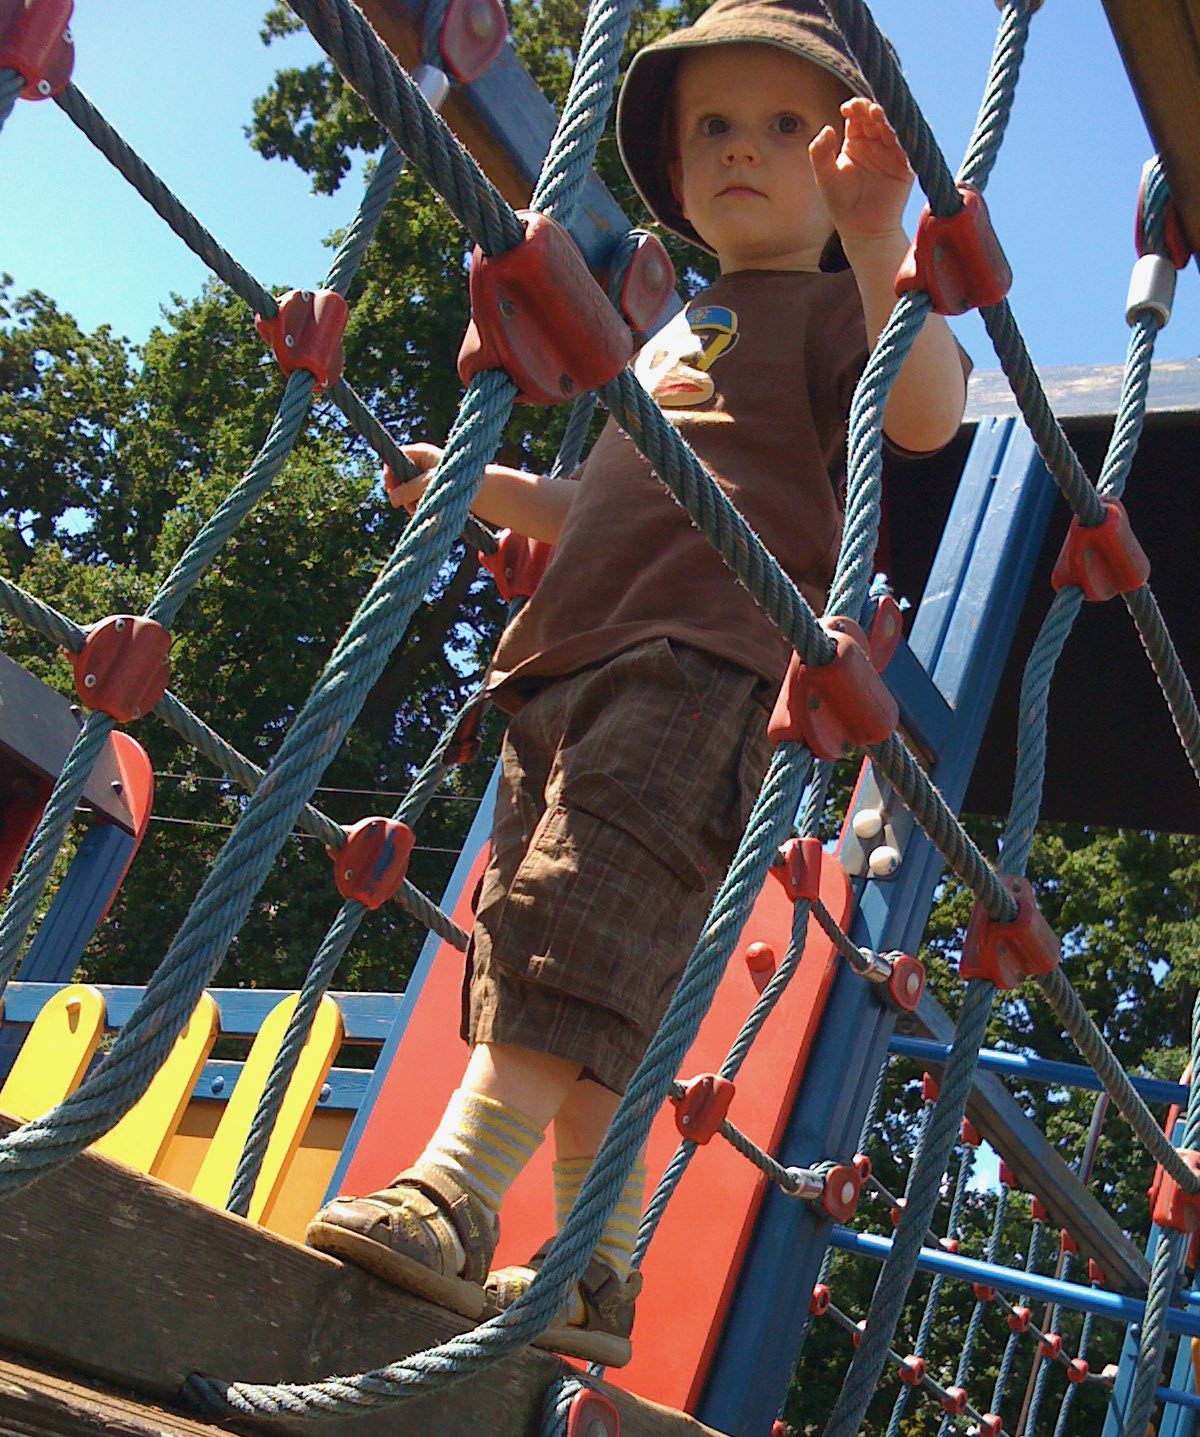 HEF on the big-boy climbing frame